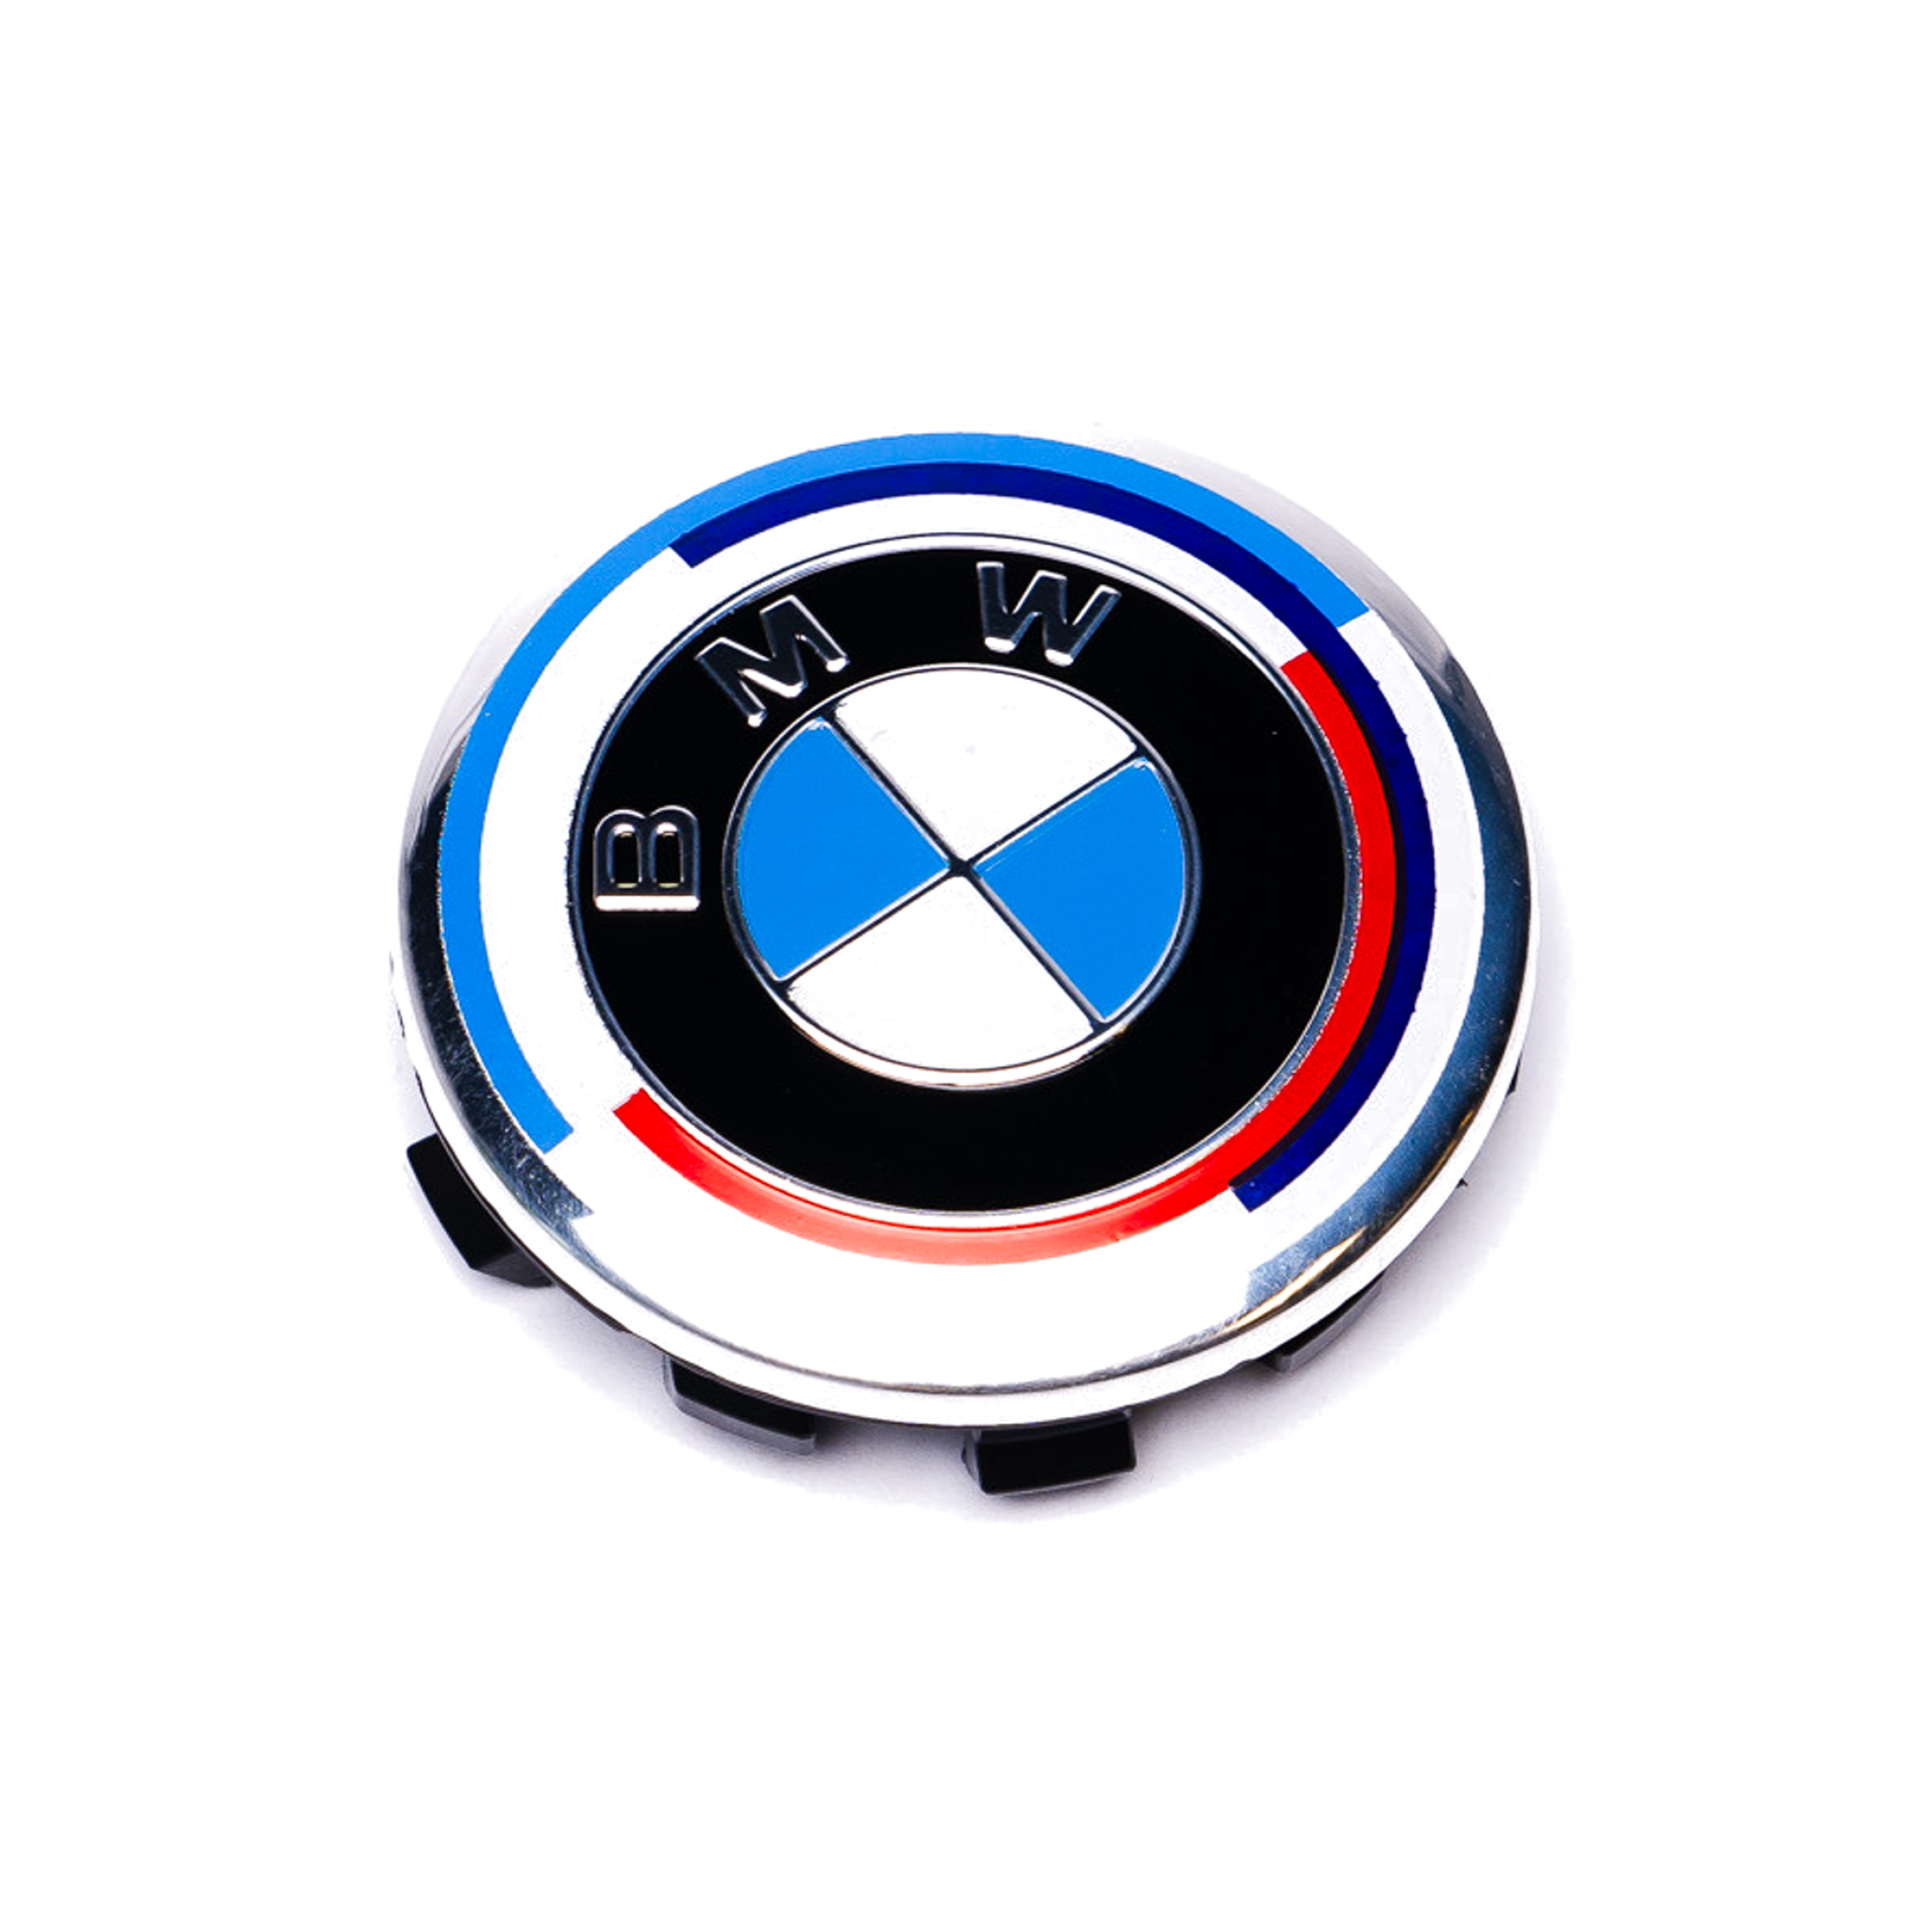 Exon BMW 50th Anniversary Style Wheel Center Cap 56mm for BMW 1 2 3 5 7 8 X1 X2 X3 X4 X5 X6 X7